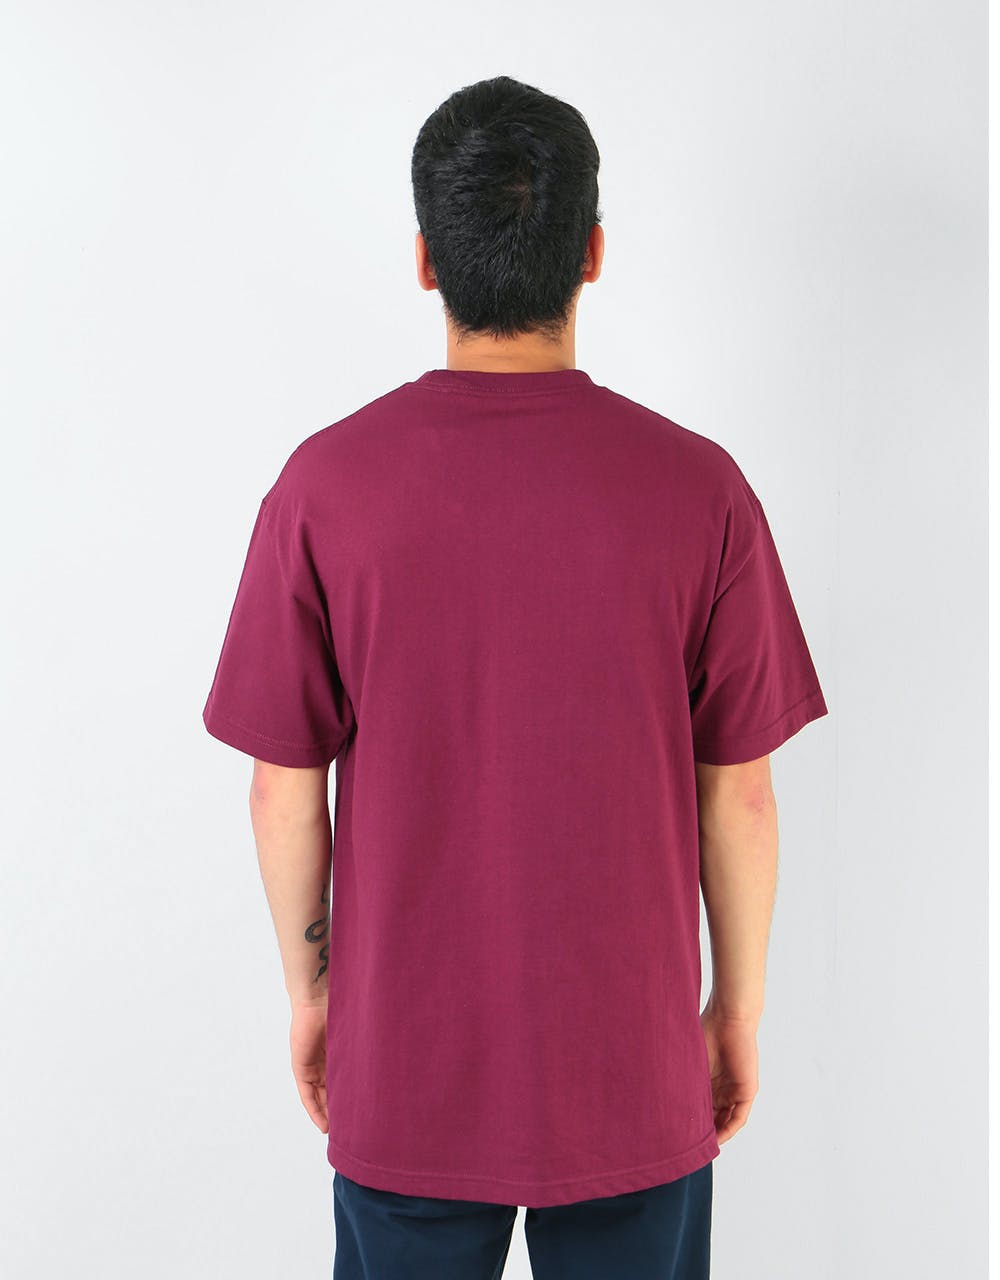 Primitive Matador T-Shirt - Burgundy